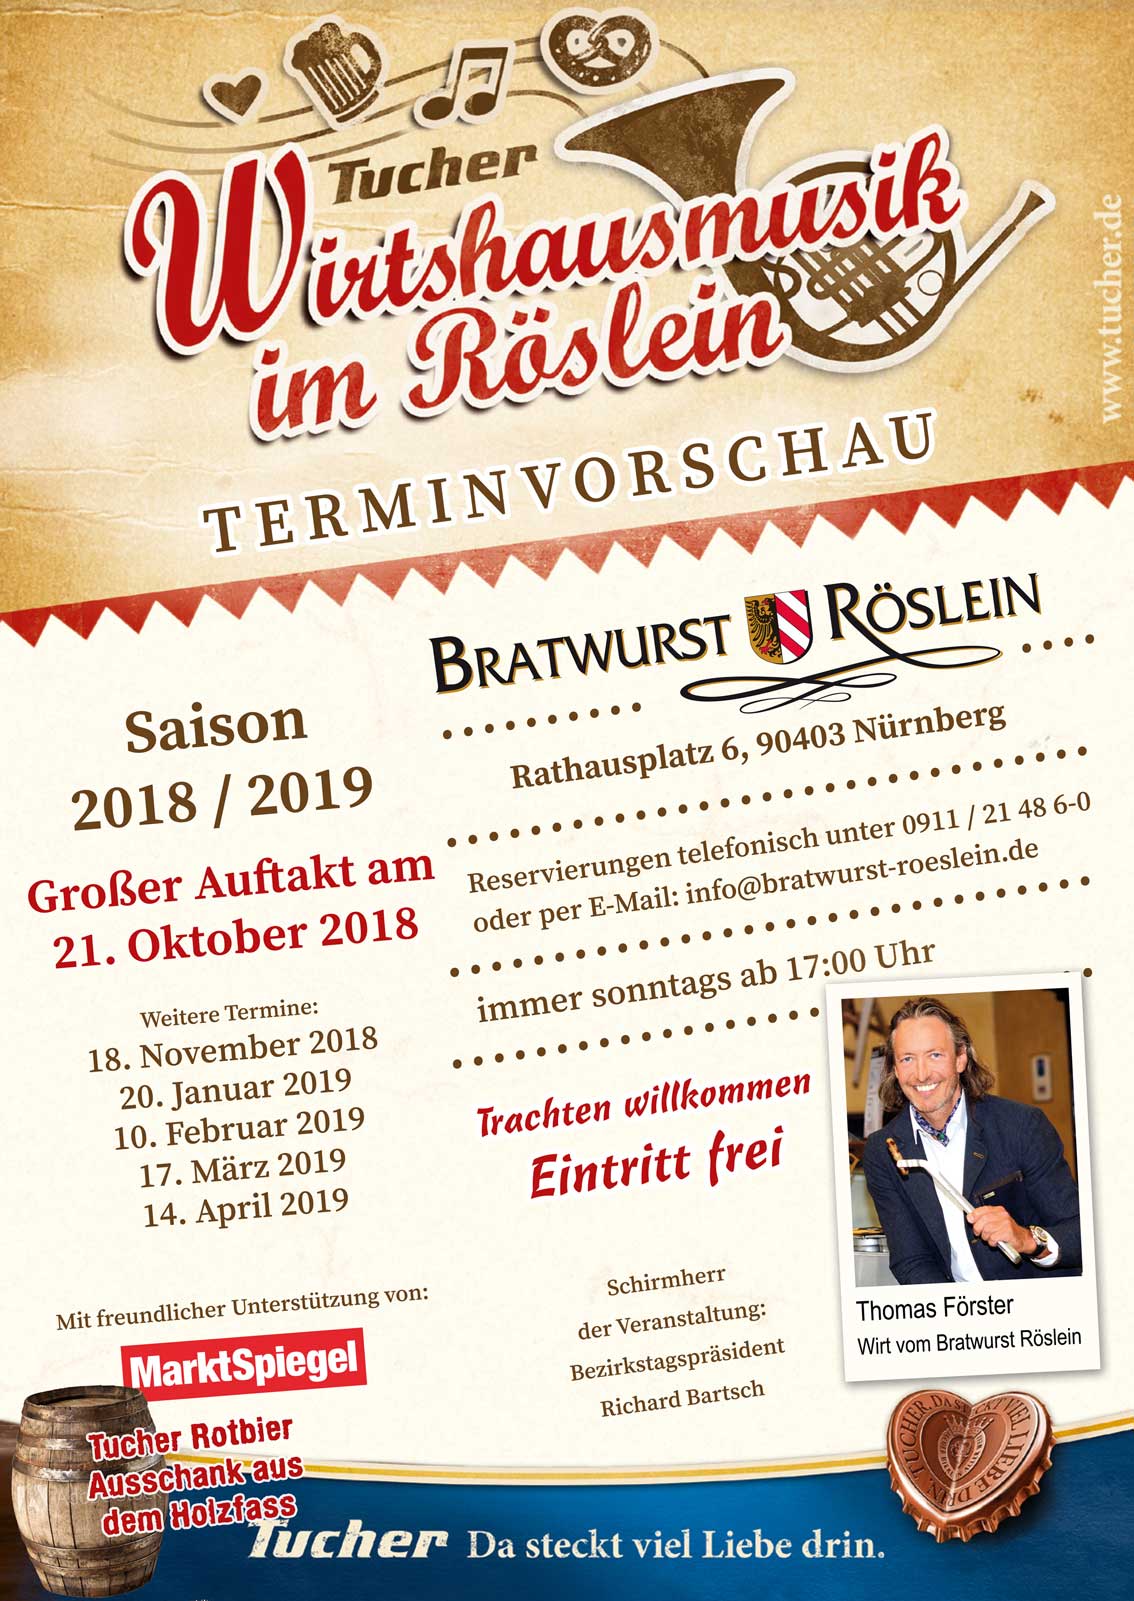 Wirtshausmusik 2018/2019: "Hammerbachtaler Blous´n" 